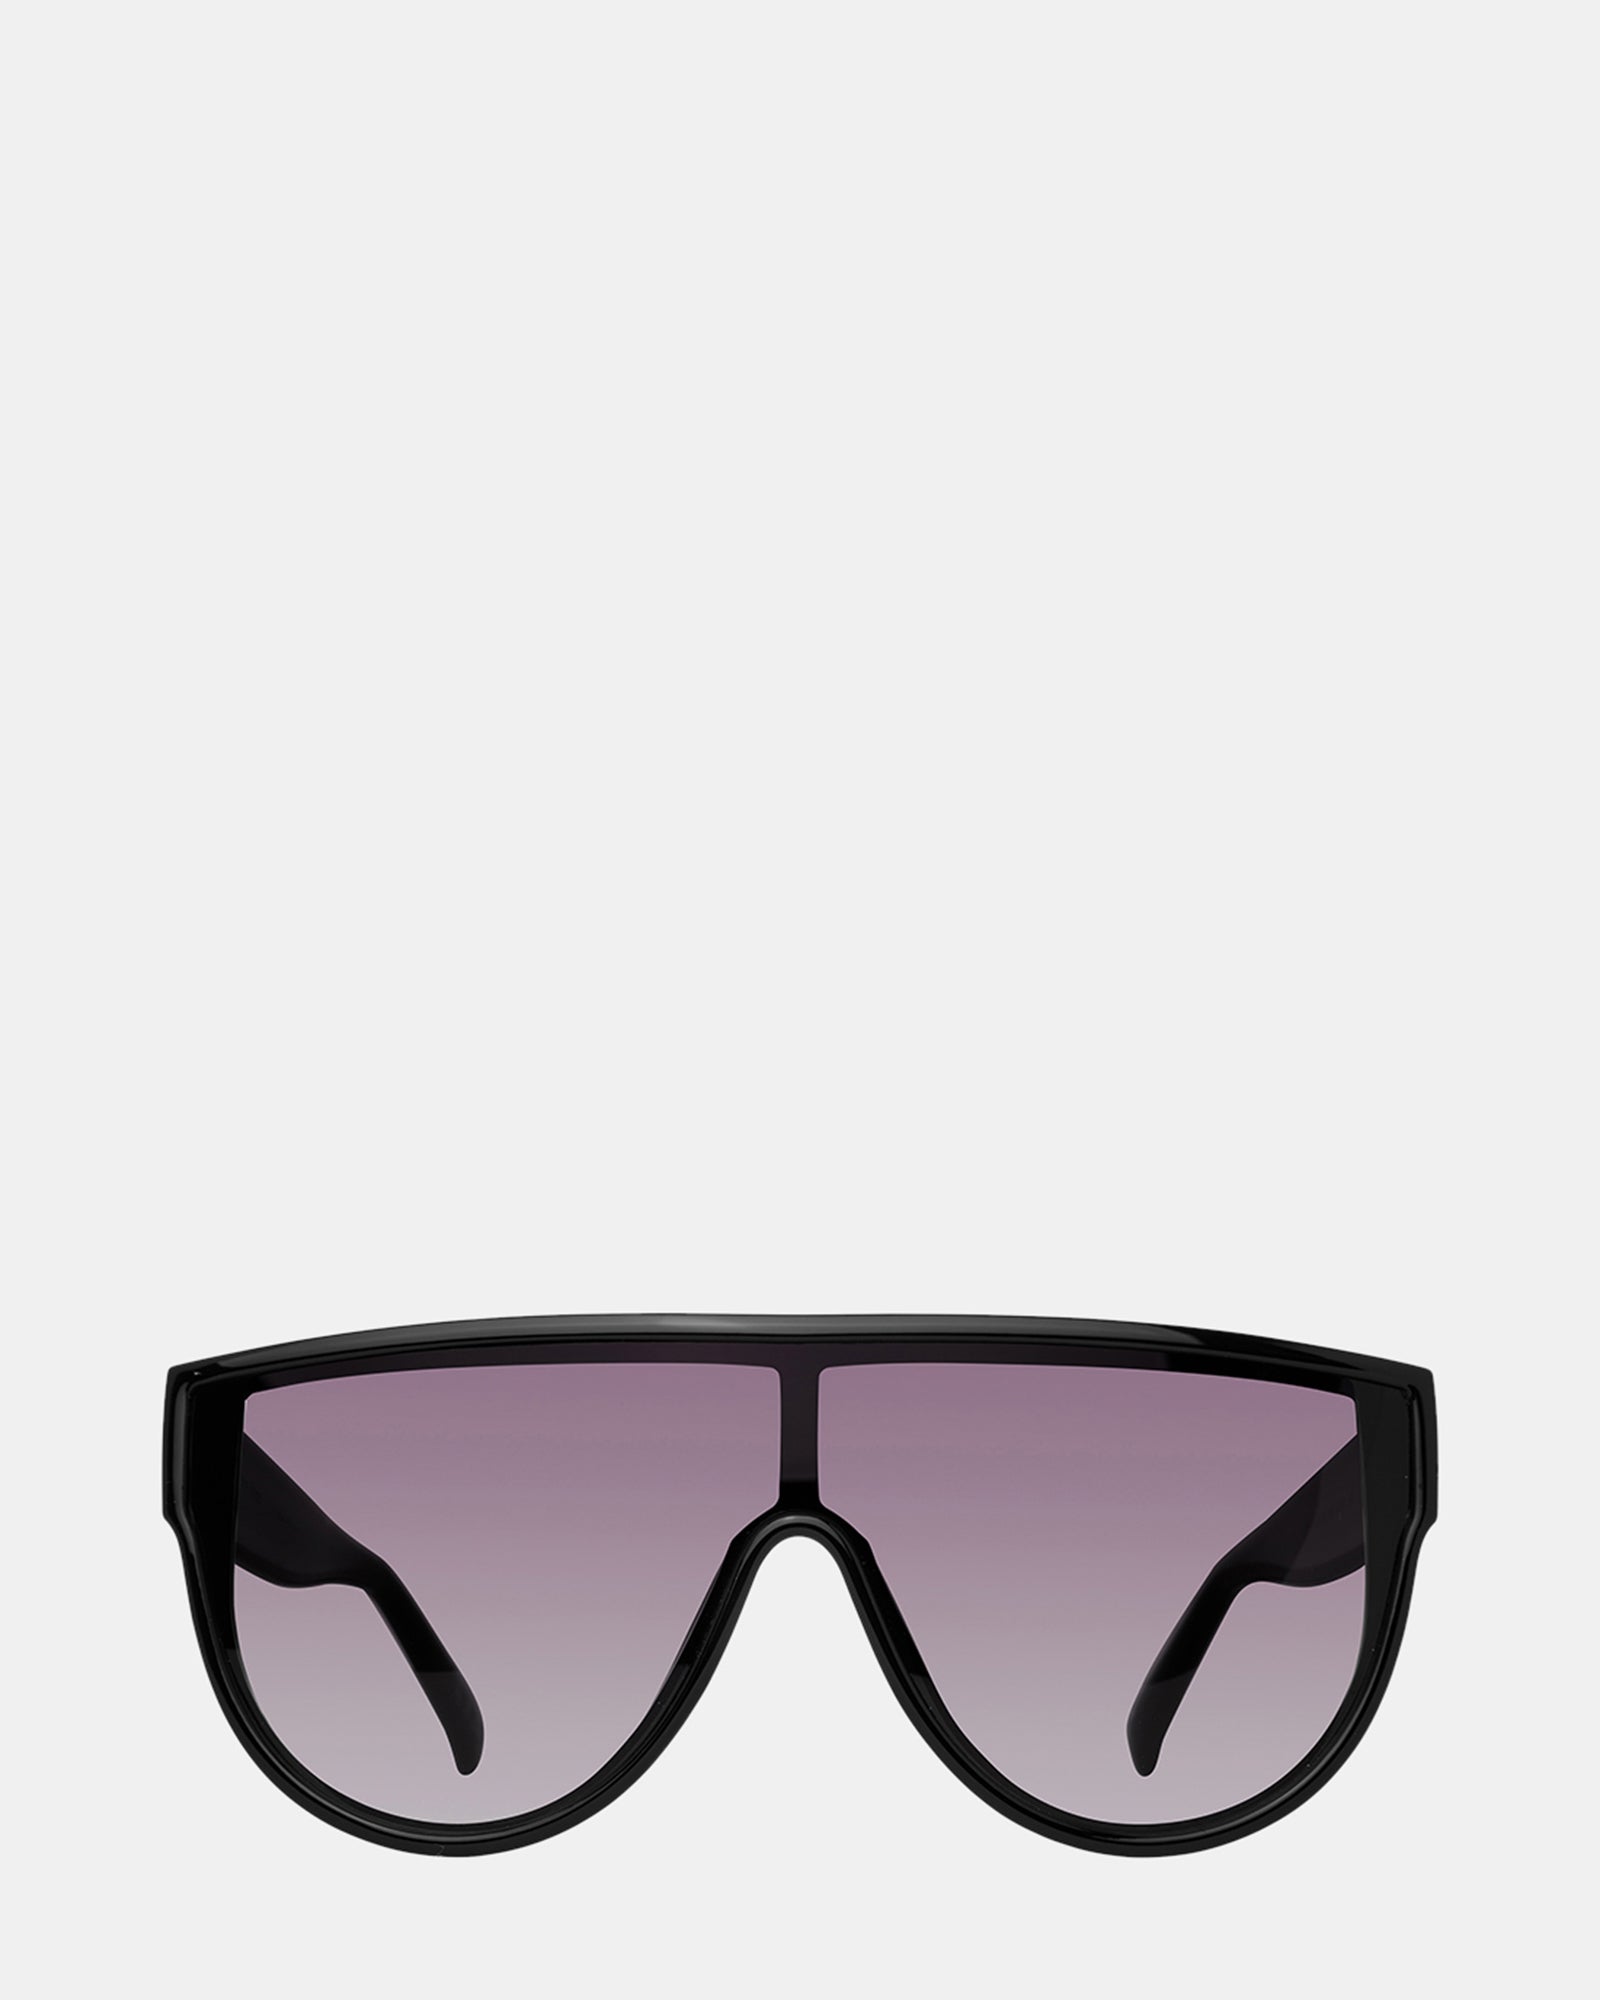 Women's Block Lens Flat Top Shield Sunglasses